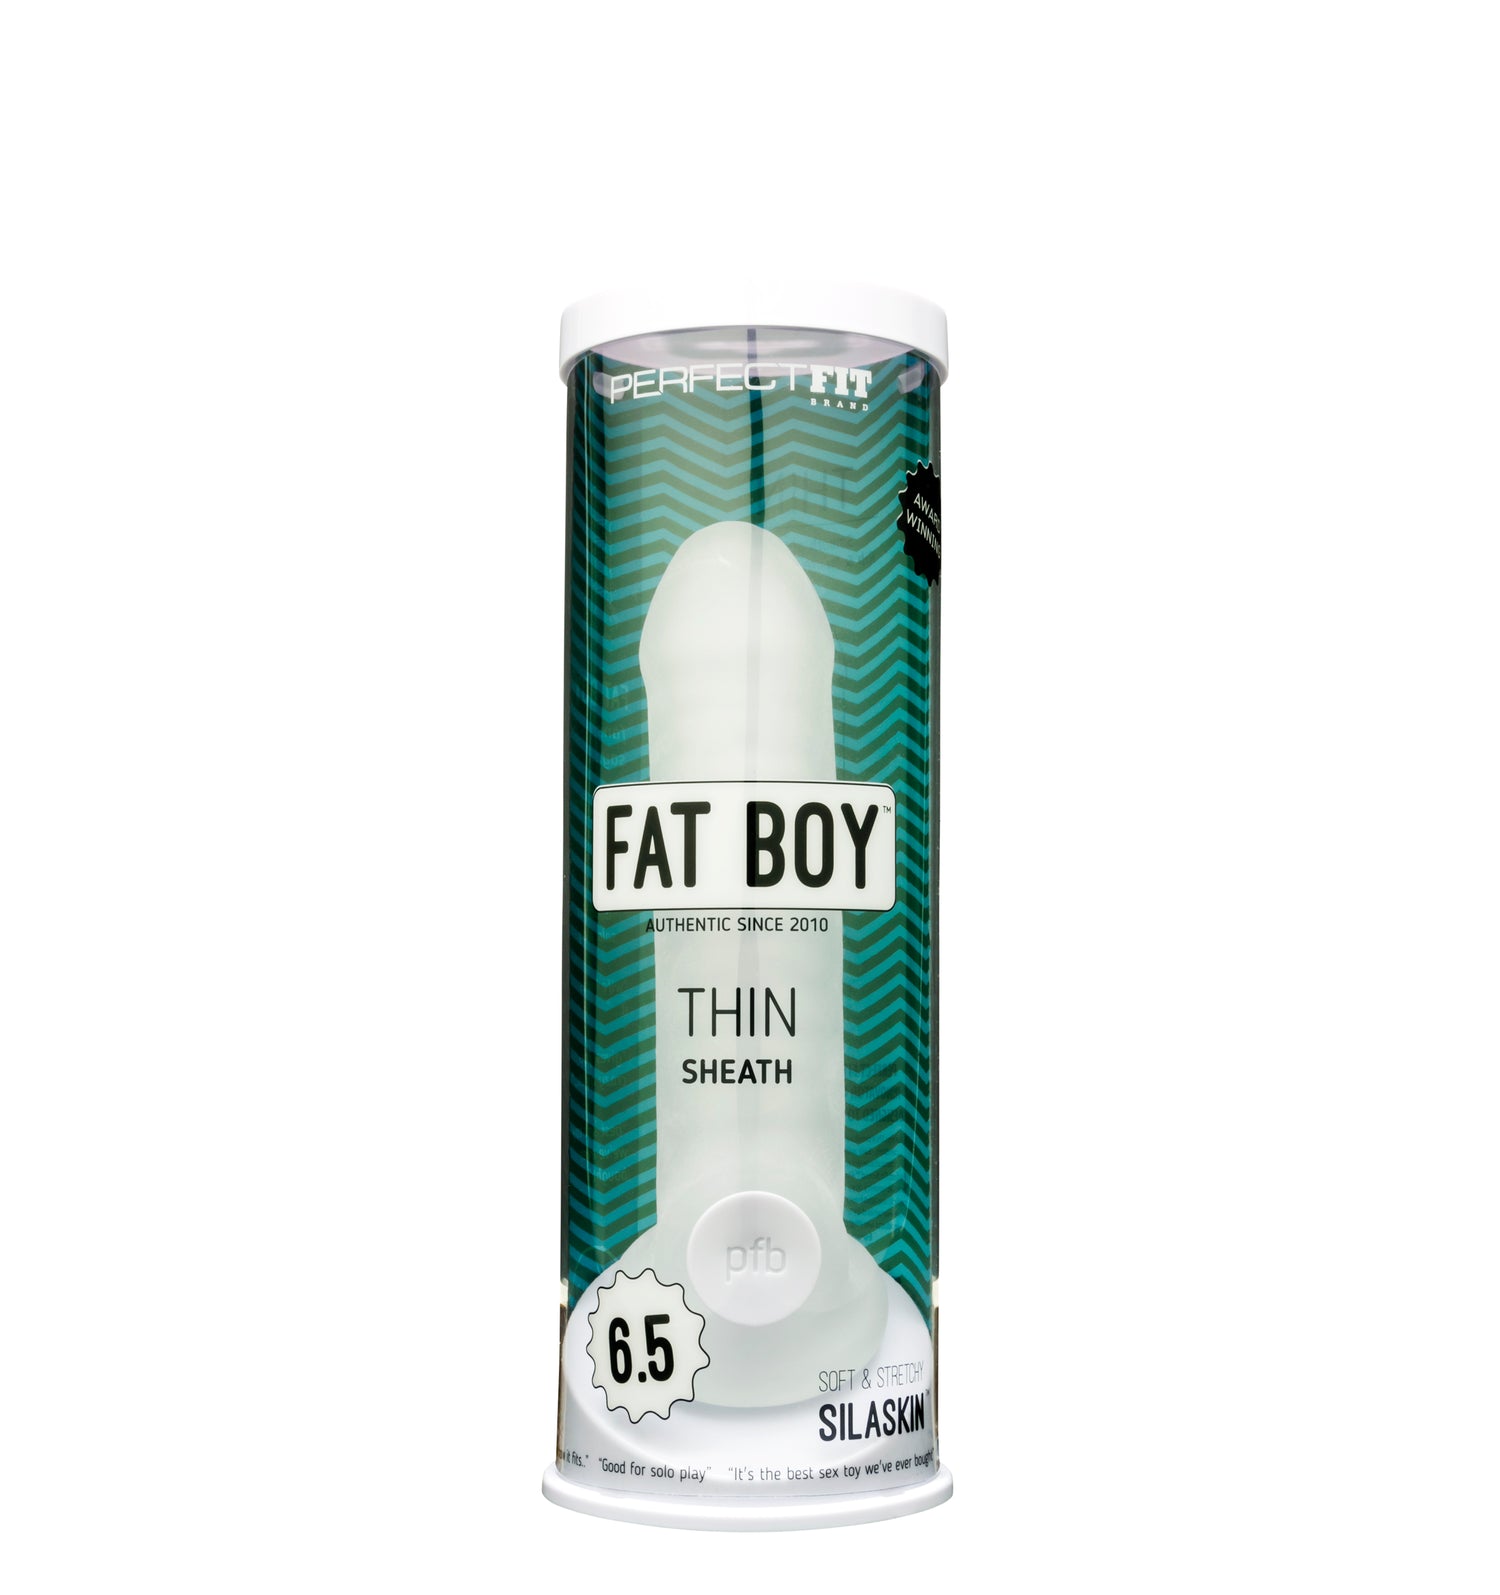 Fat Boy Thin Sheath 6.5 - Just for you desires